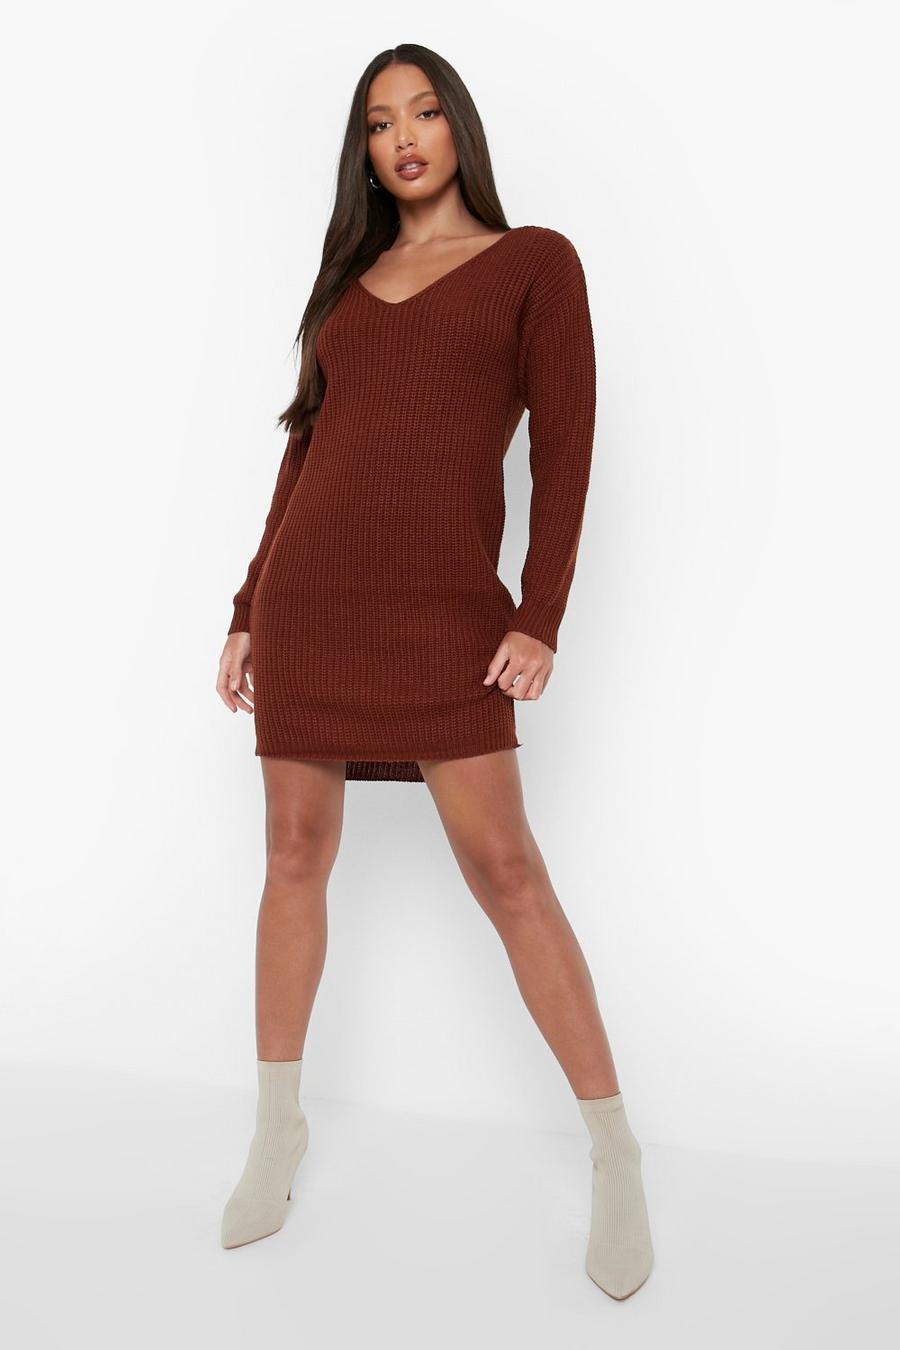 Mahogany שמלת סוודר מבד ממוחזר עם צווארון וי, לנשים גבוהות image number 1